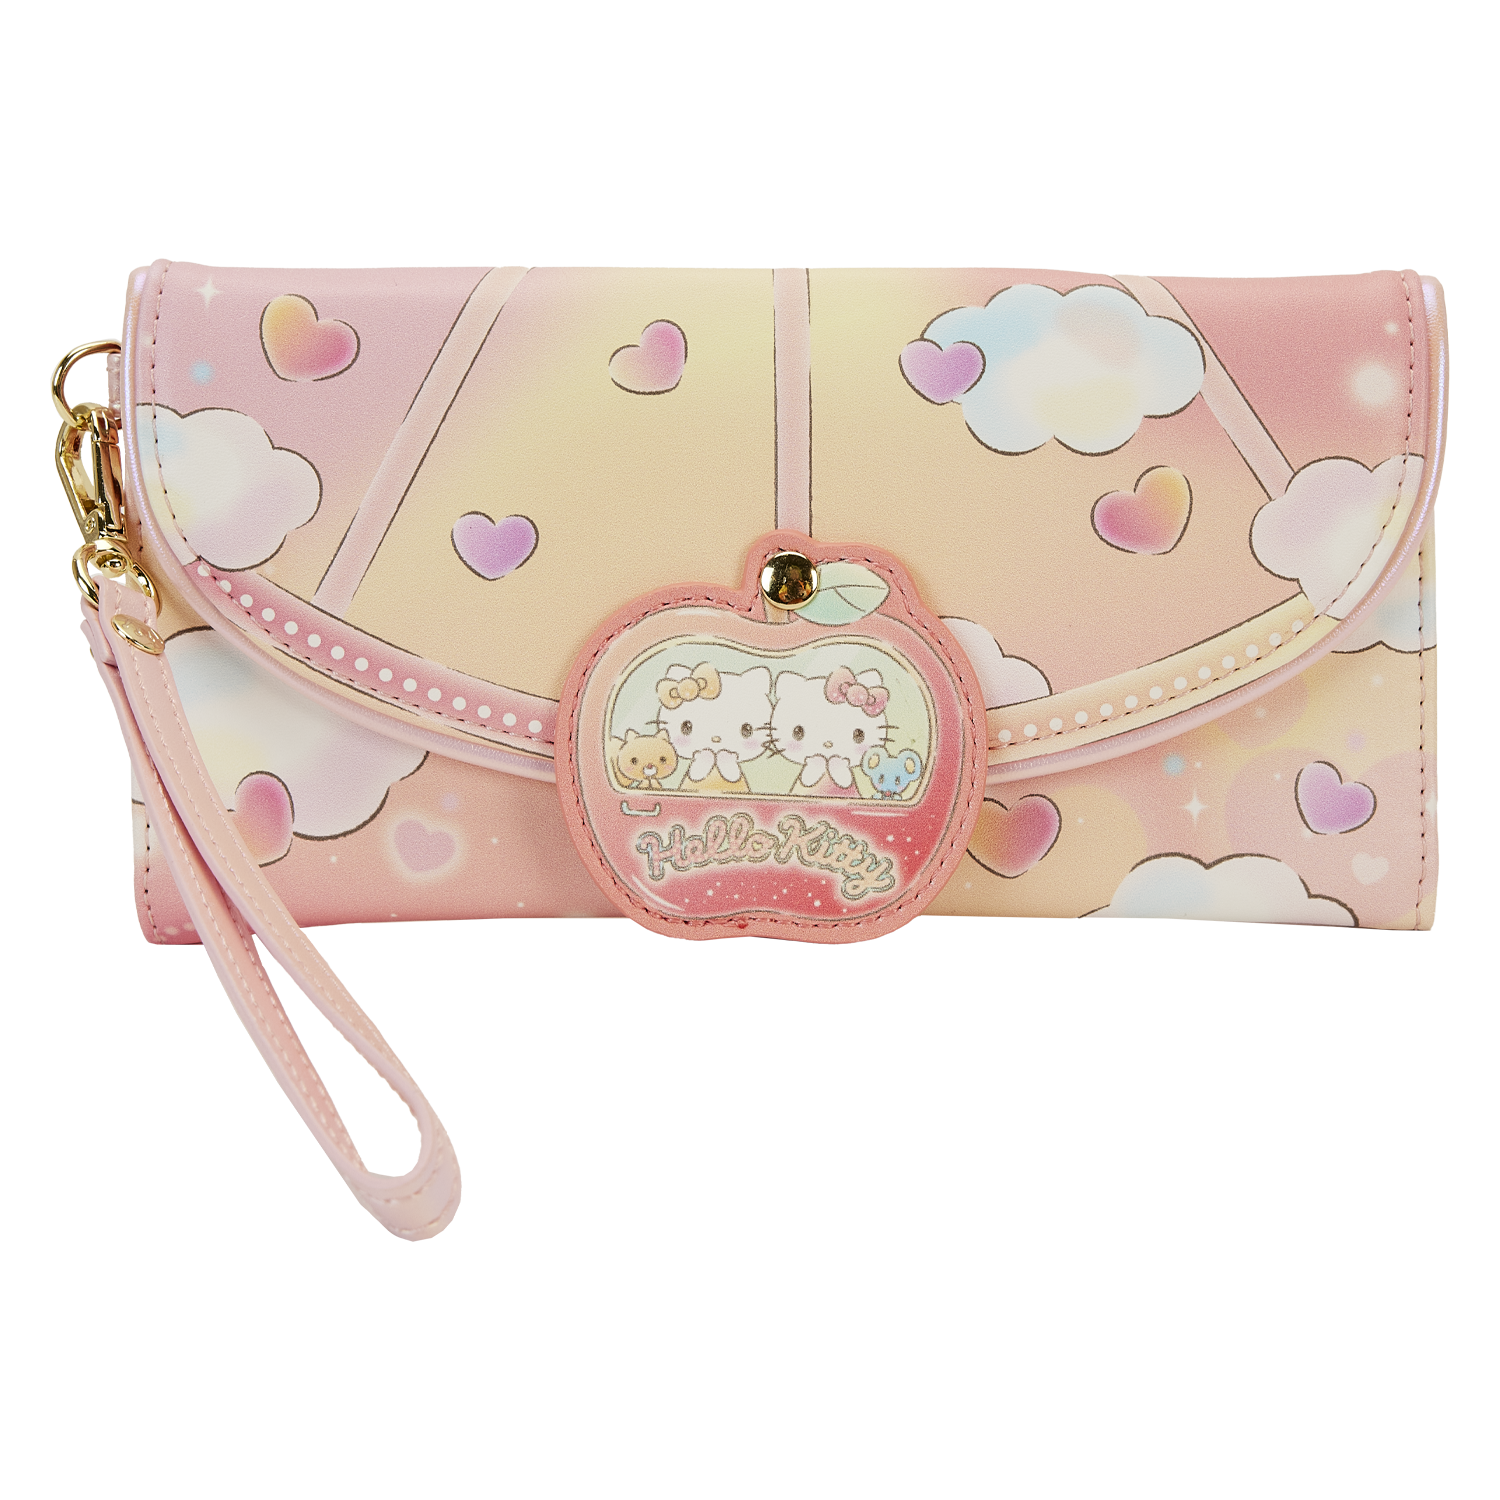 Sanrio Hello Kitty Carnival Wristlet